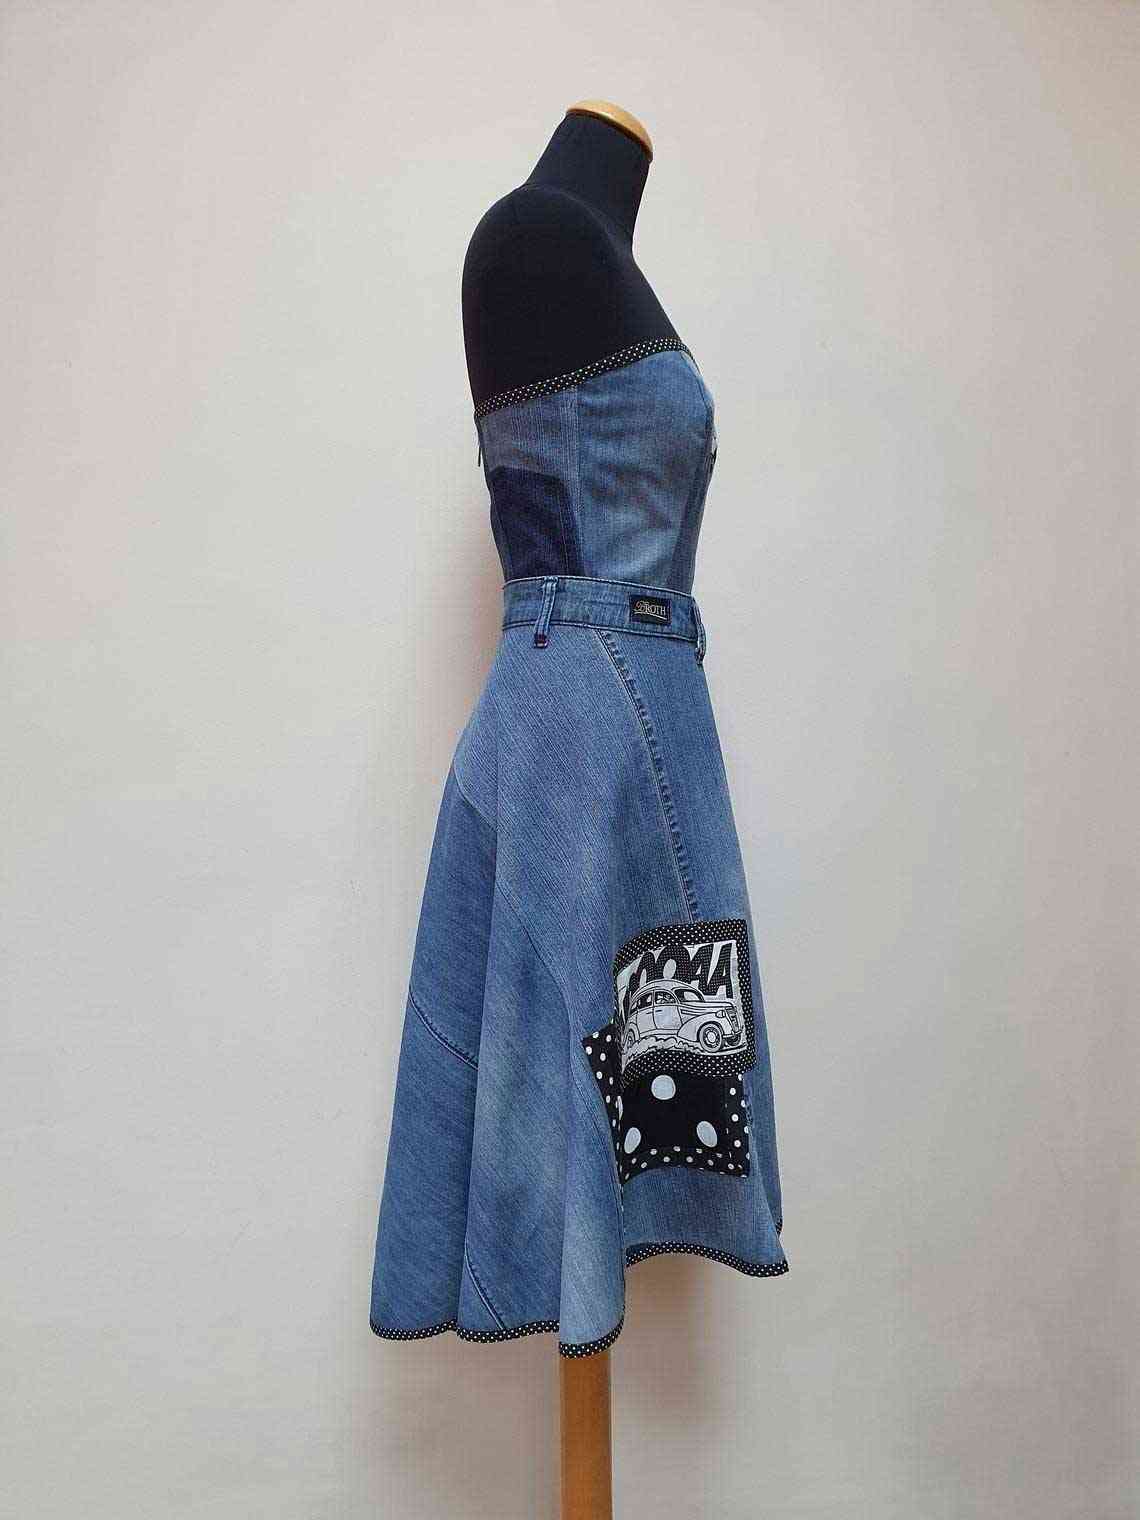 Stylish denim dress made of old jeans